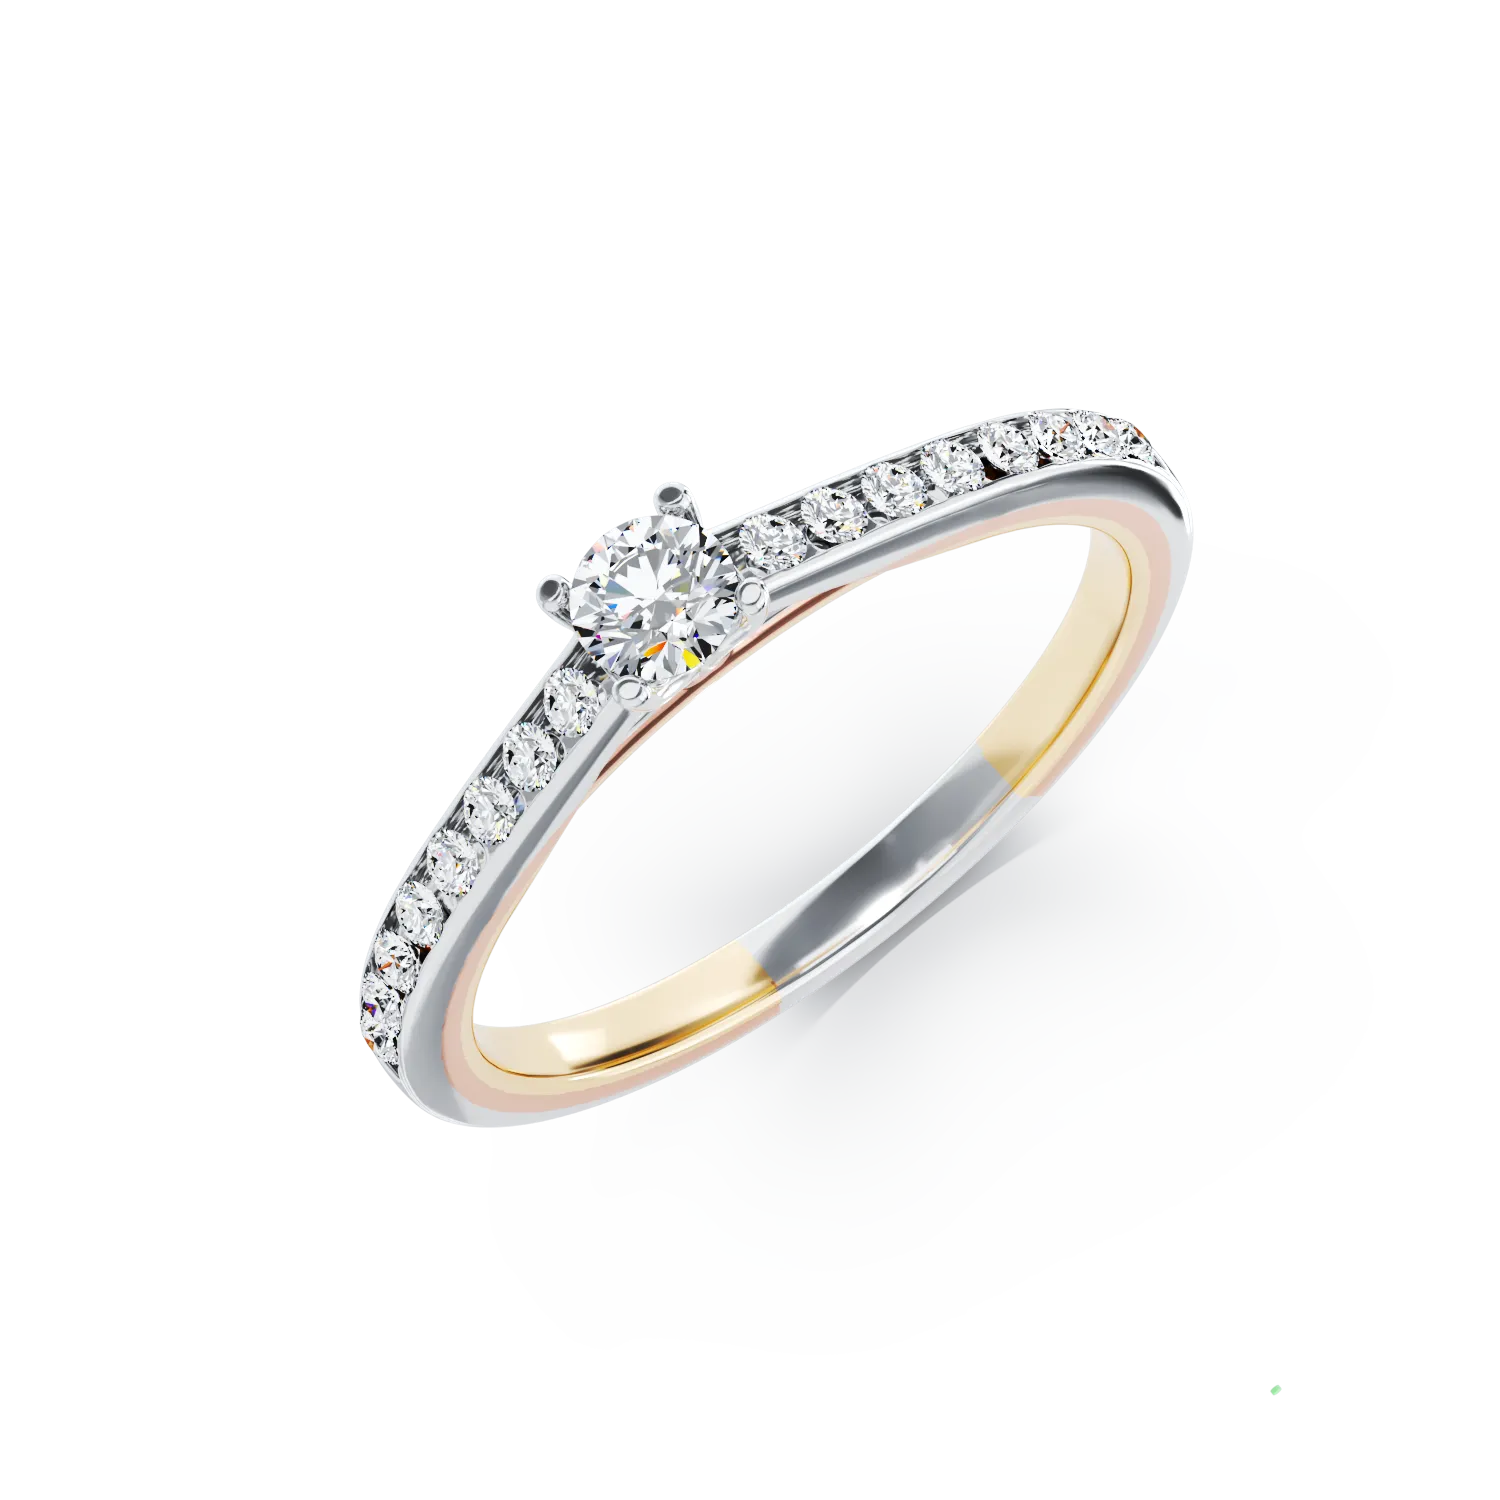 18K white-yellow gold engagement ring with 0.15ct diamond and 0.16ct diamonds